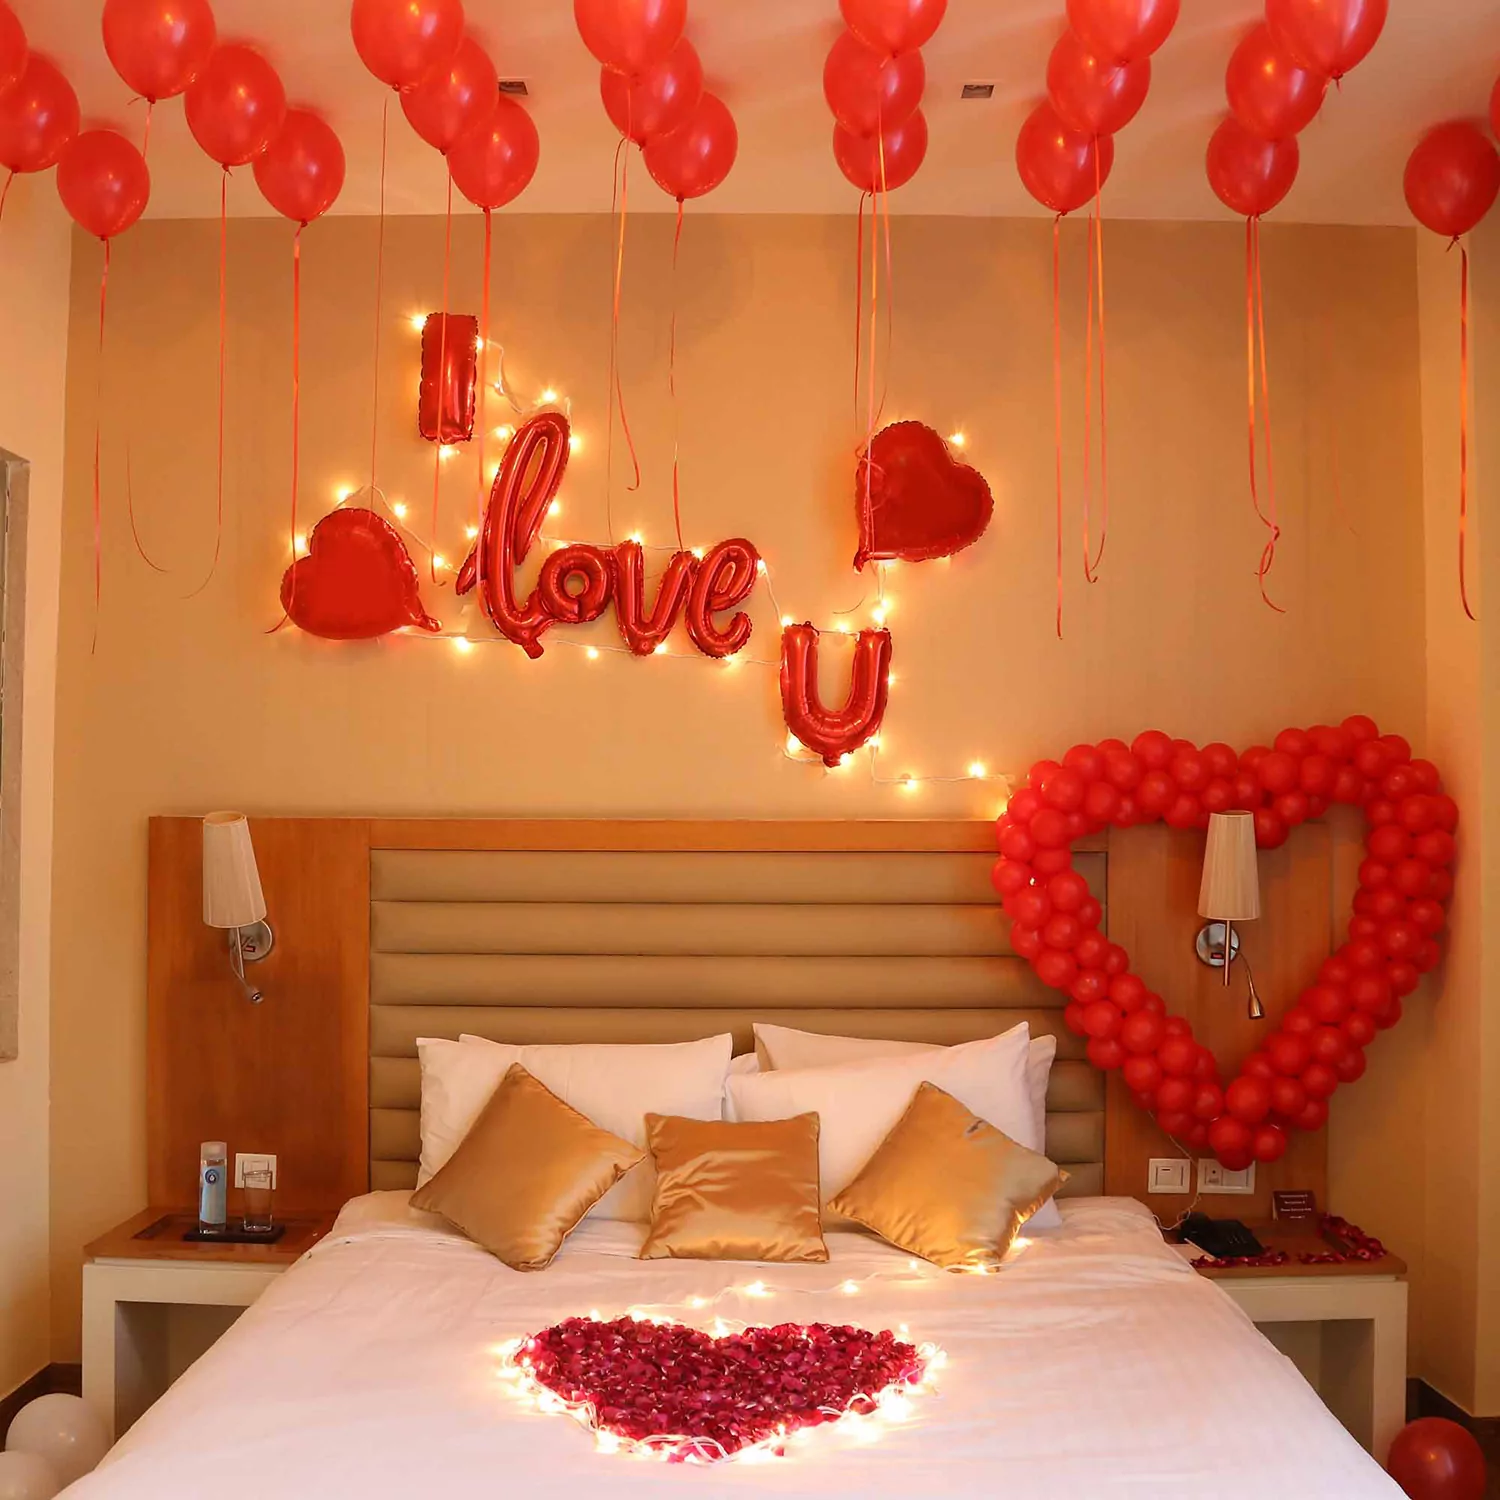 Valentine Day - I Love You Balloon Decor